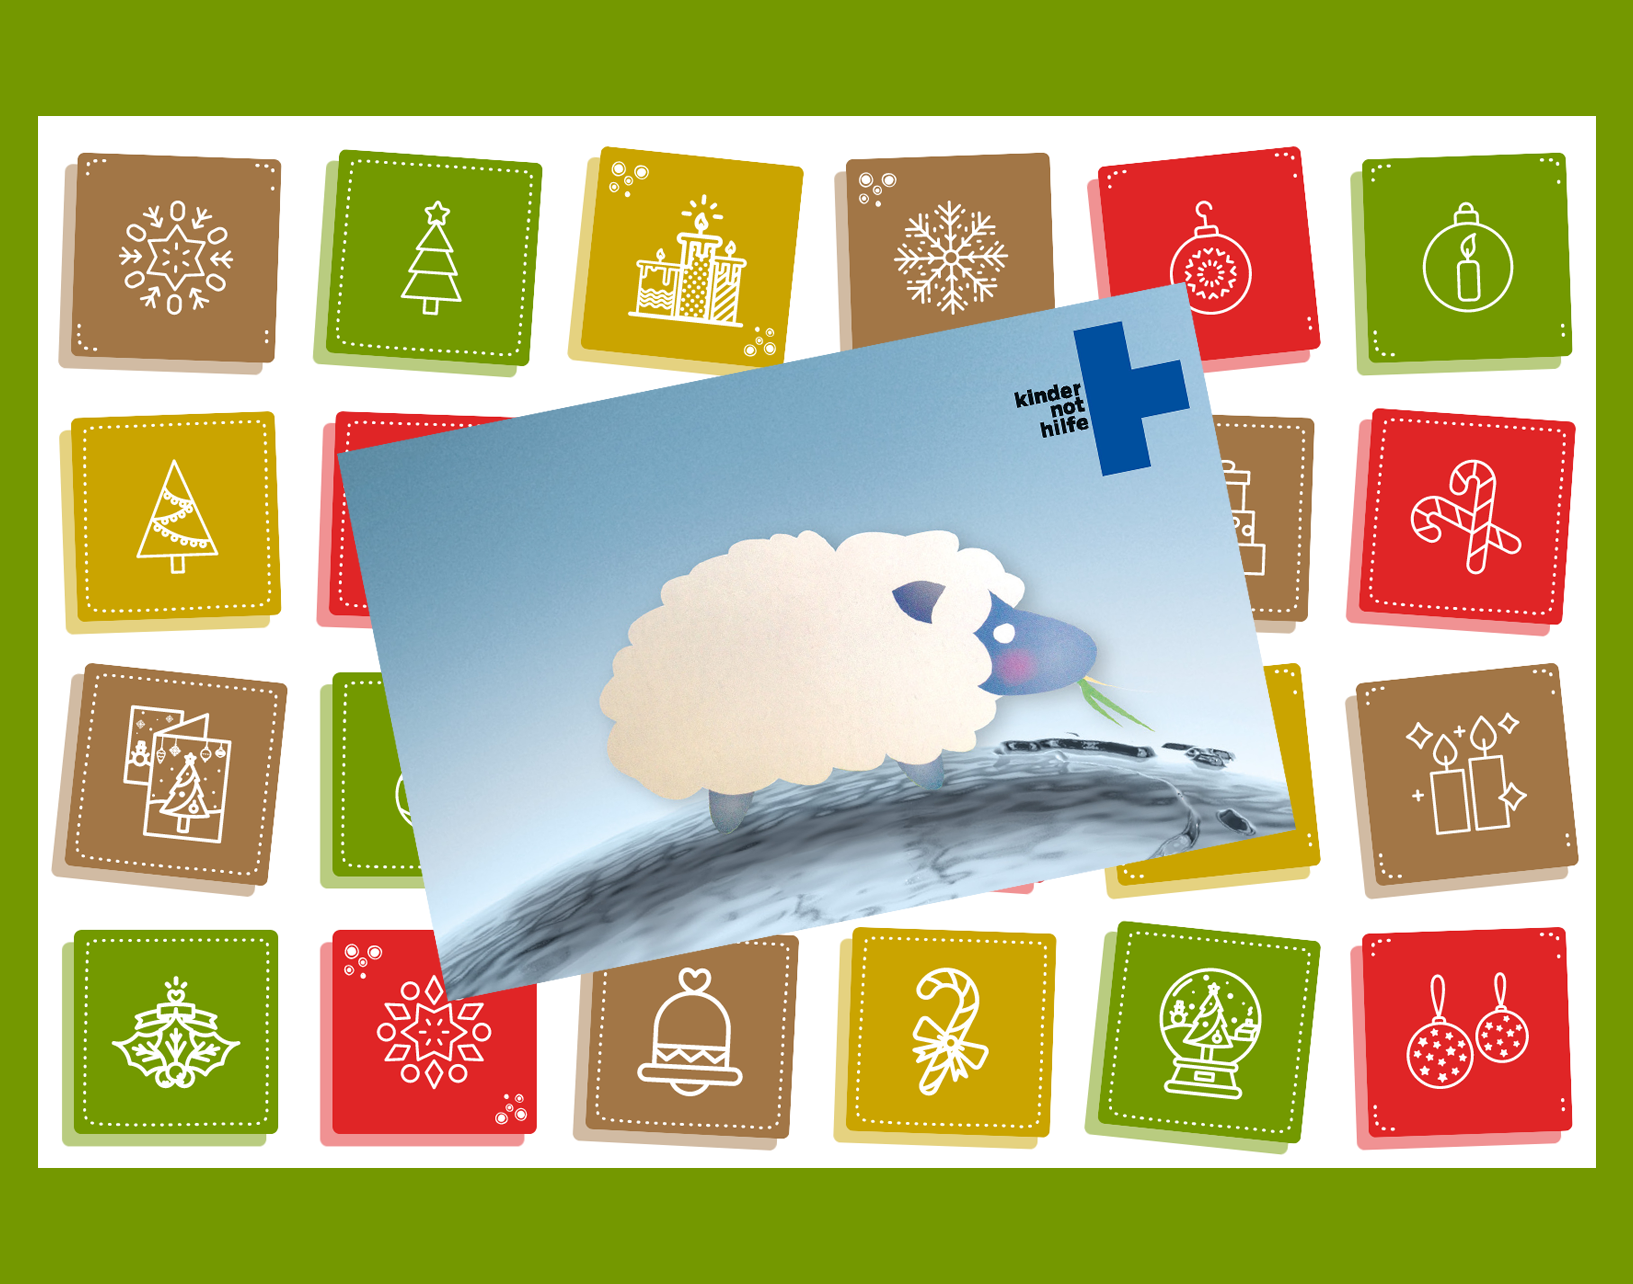 Kindernothilfe-Adventkalender 2022
Spendenshop 
Österreich